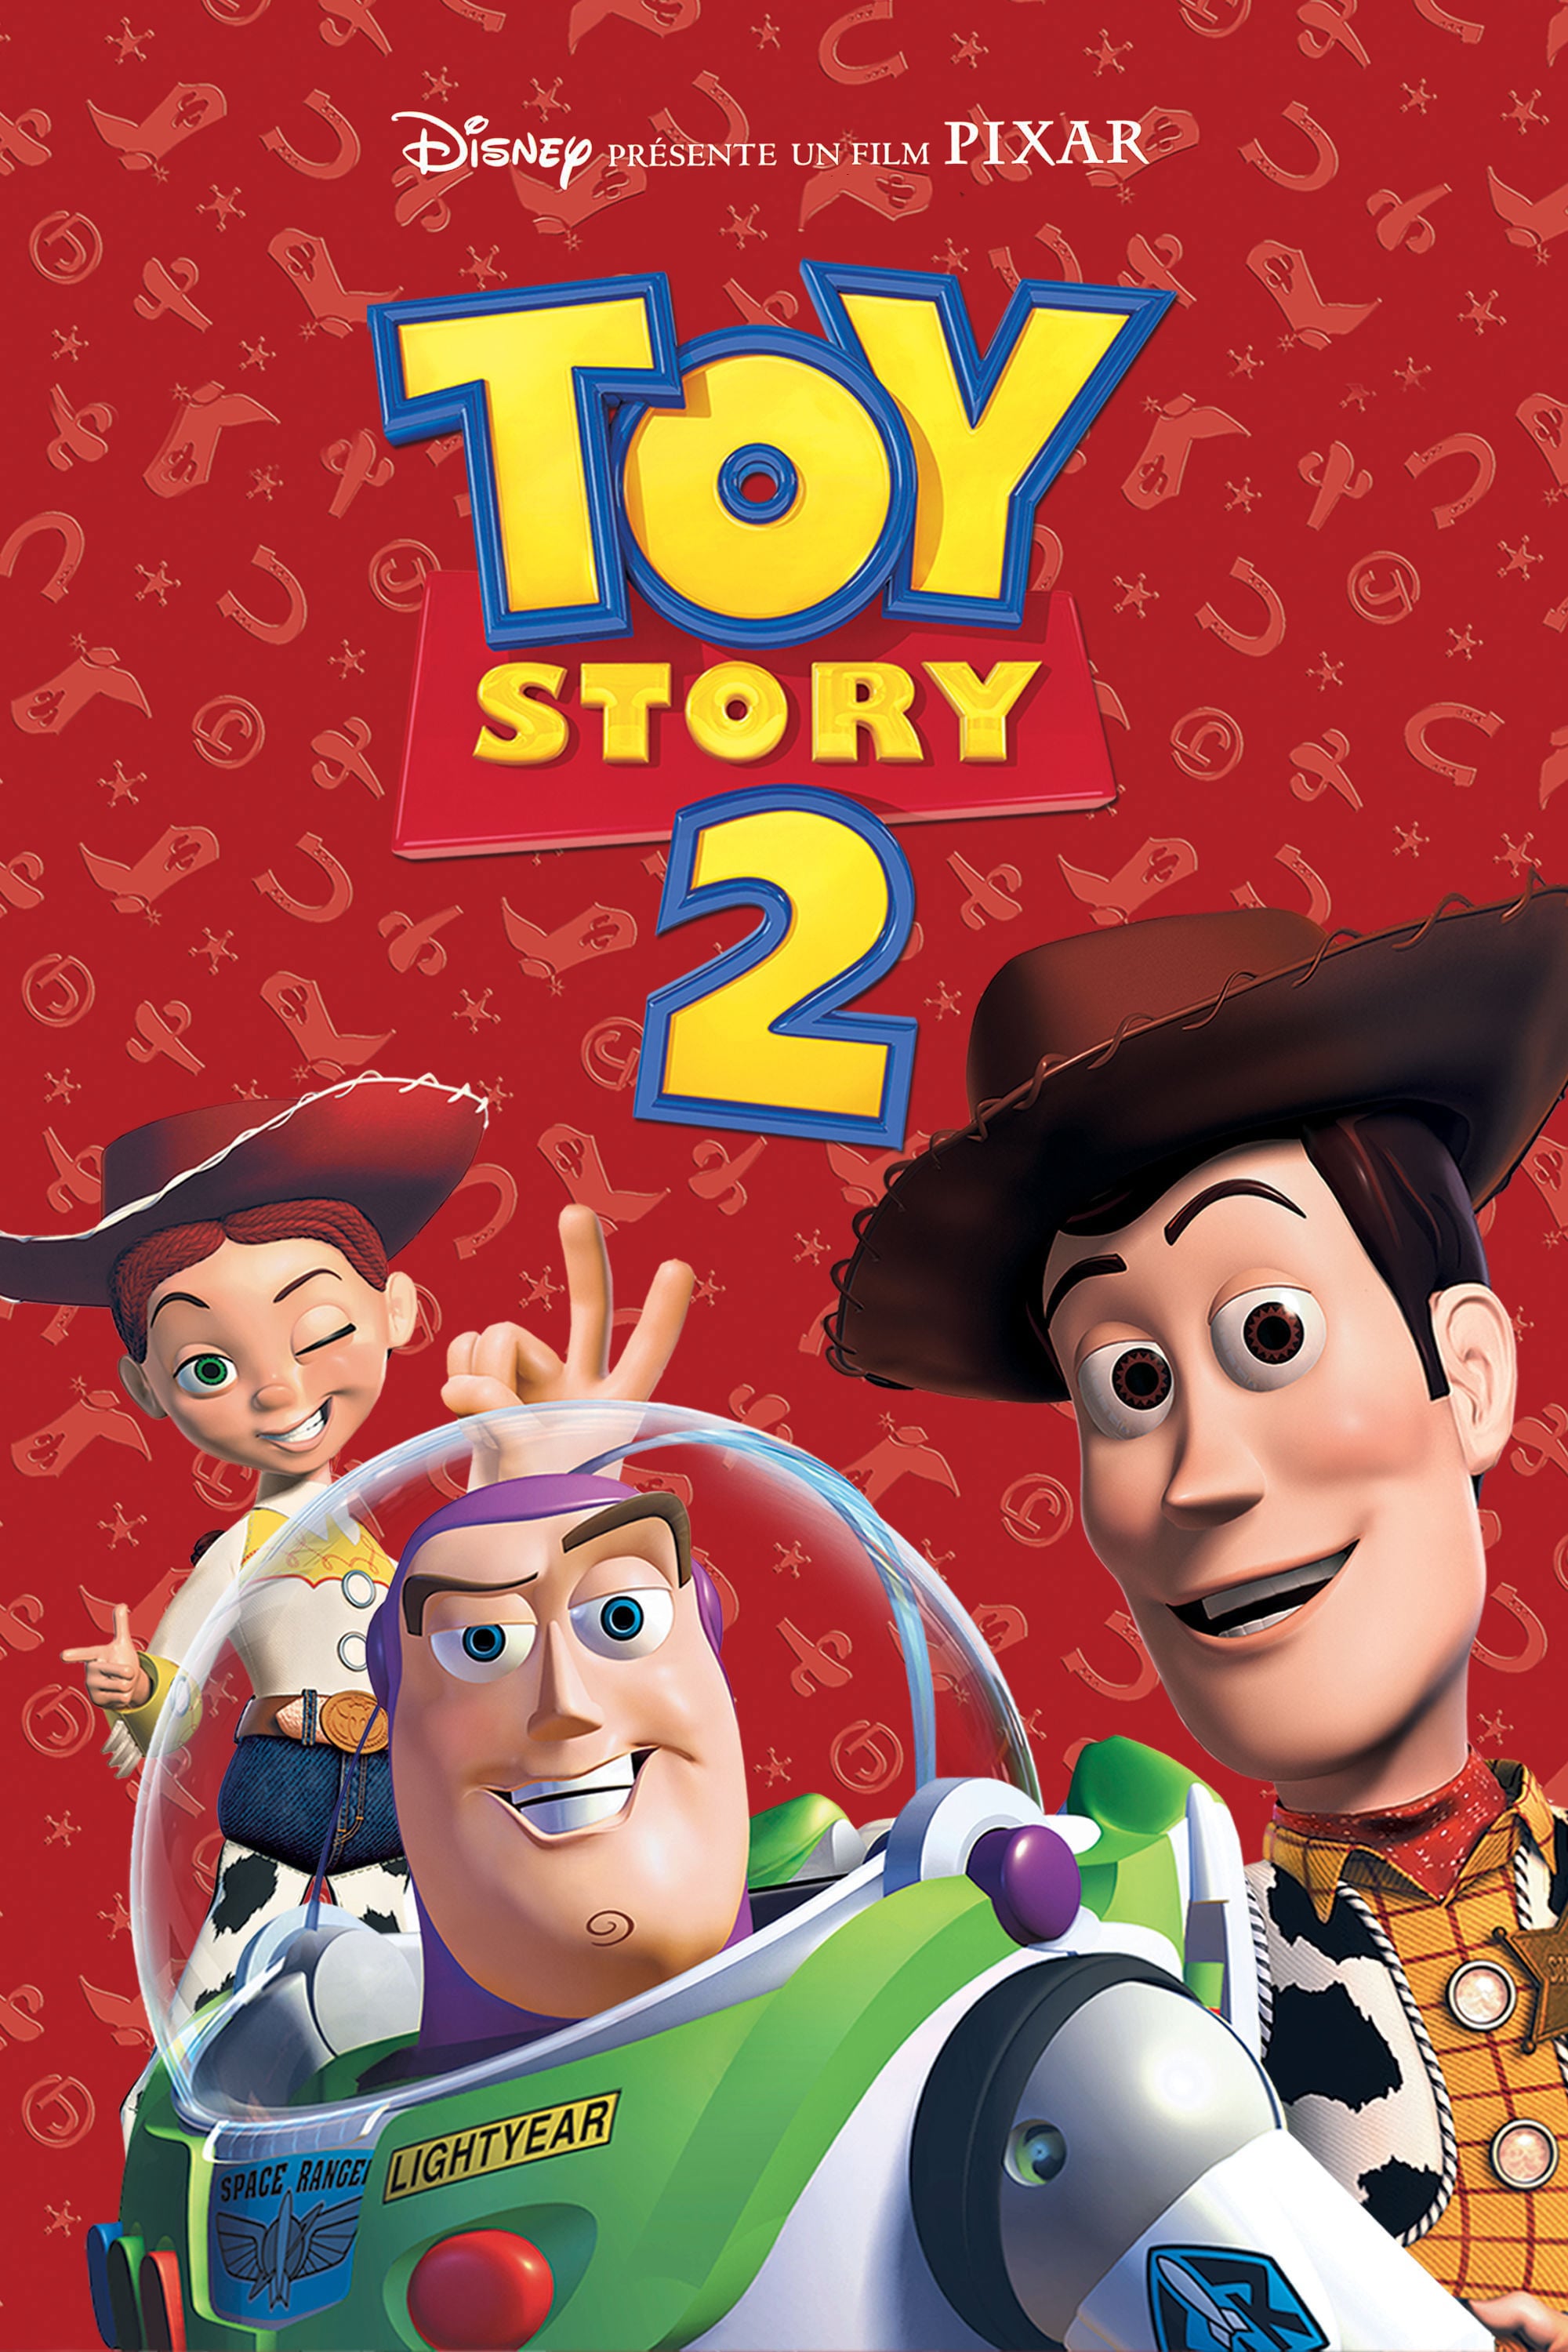 Affiche du film "Toy Story 2"